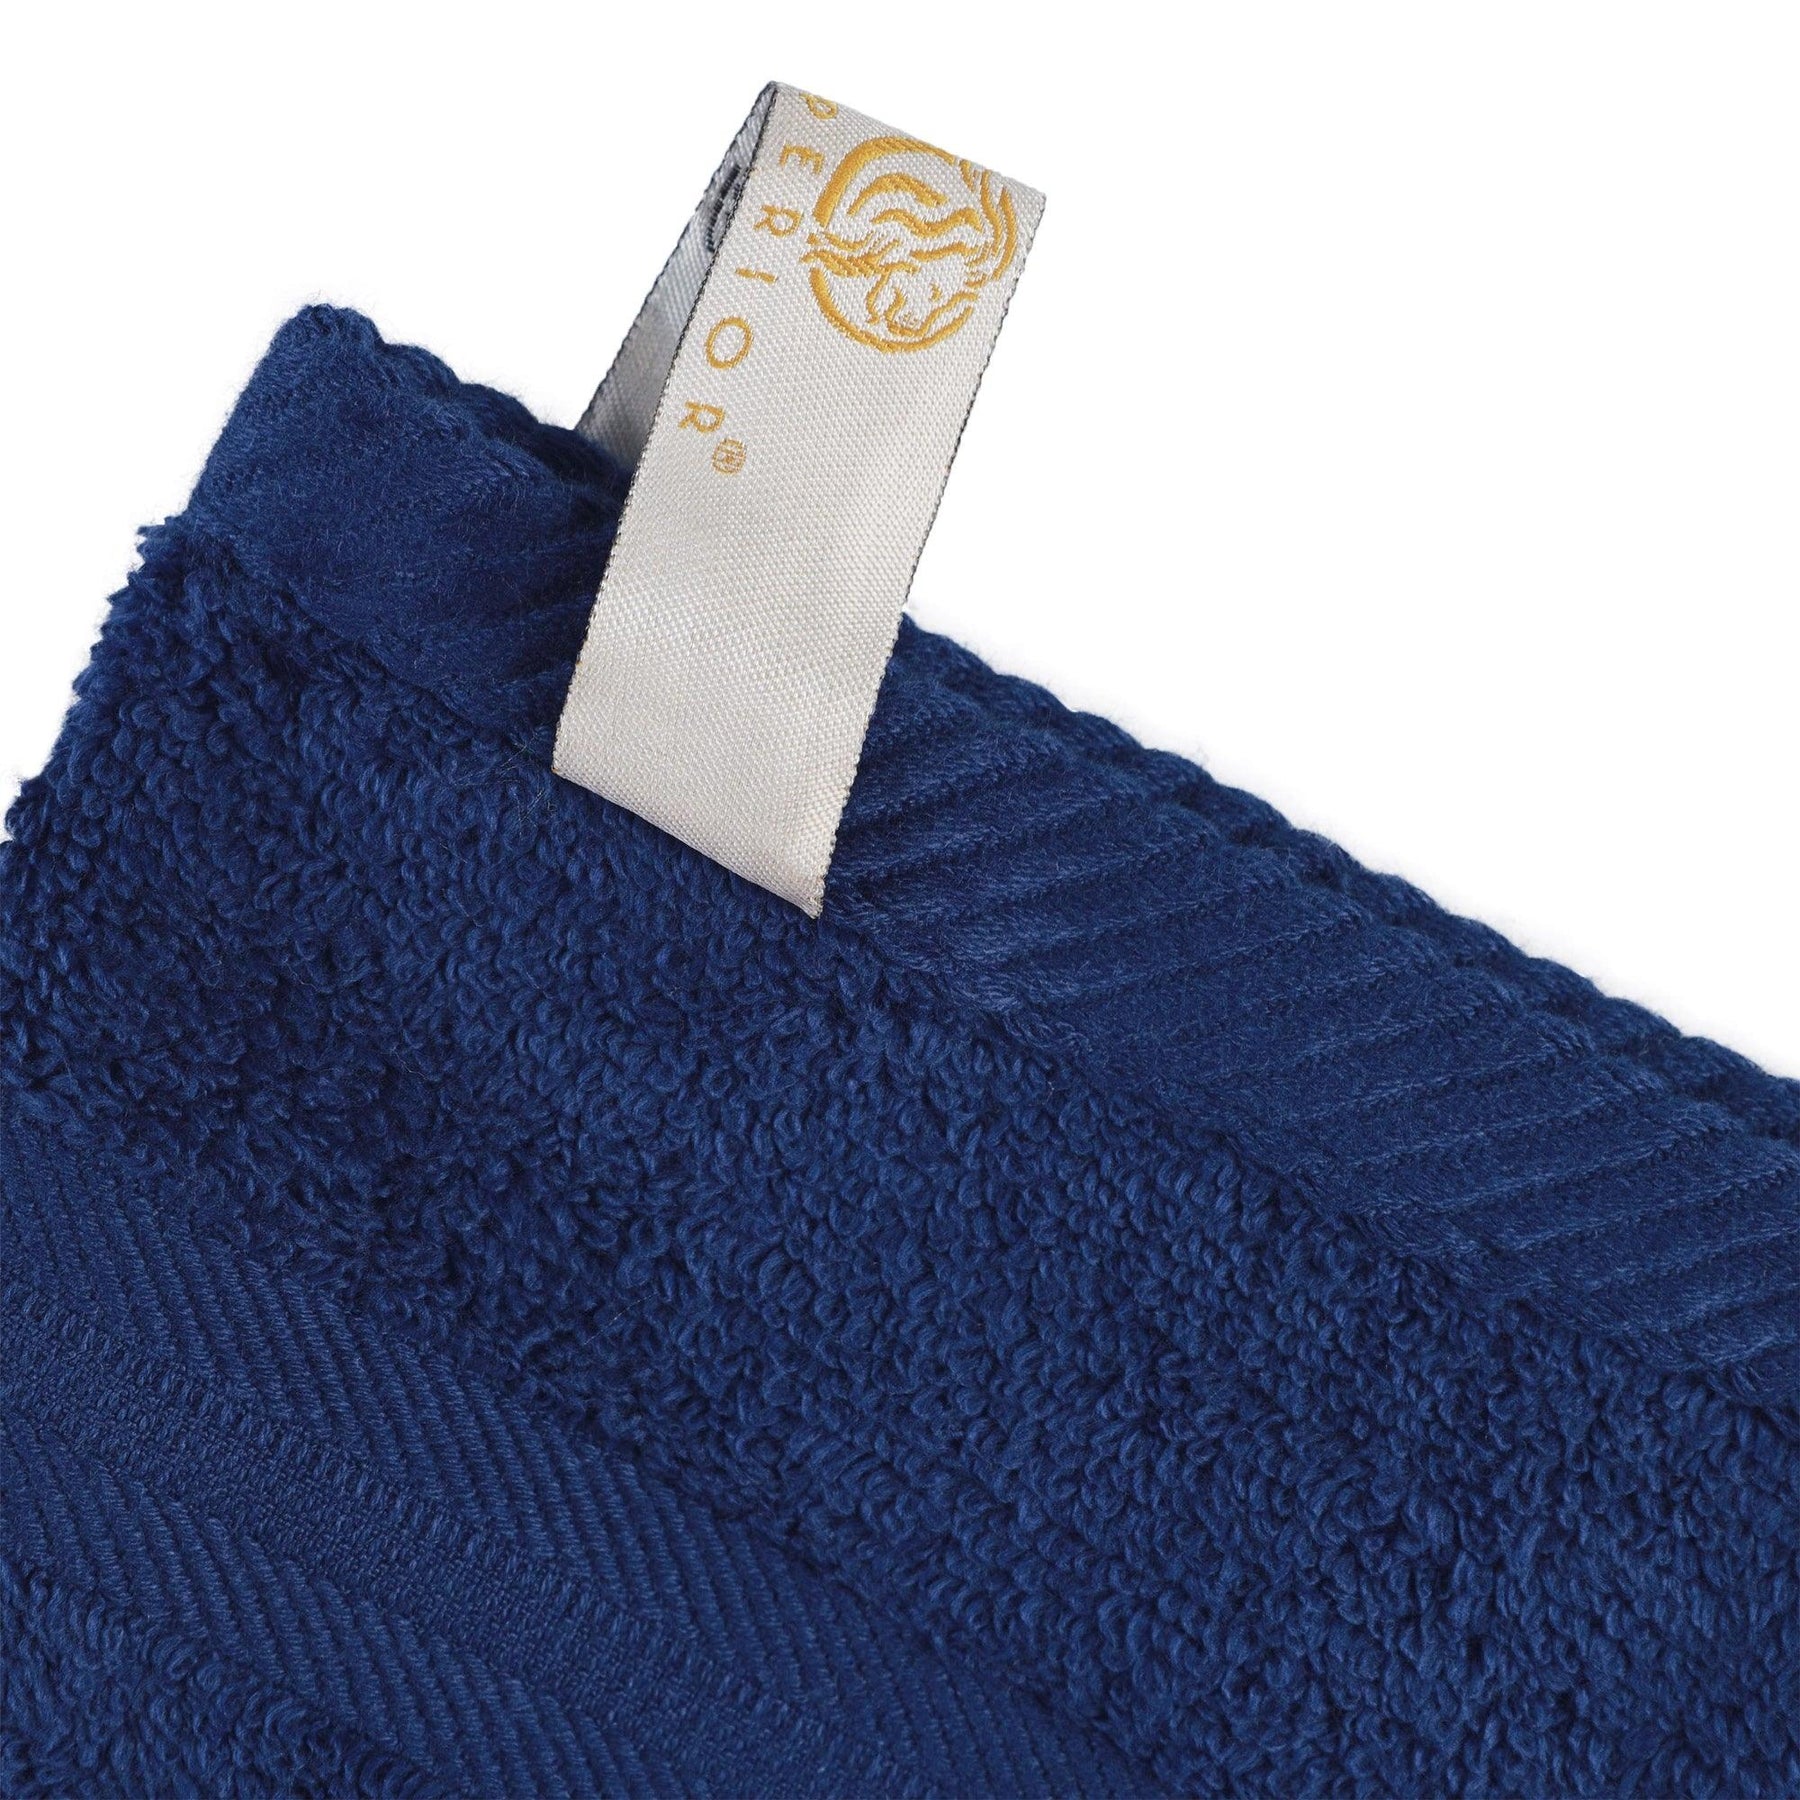 COTTON CRAFT Bath Towels - 4 Pack Super Zero Twist Bath Towel Set - 100%  Cotton 30x54 - Ultra Soft Absorbent Quick Dry 615 GSM Everyday Luxury Hotel